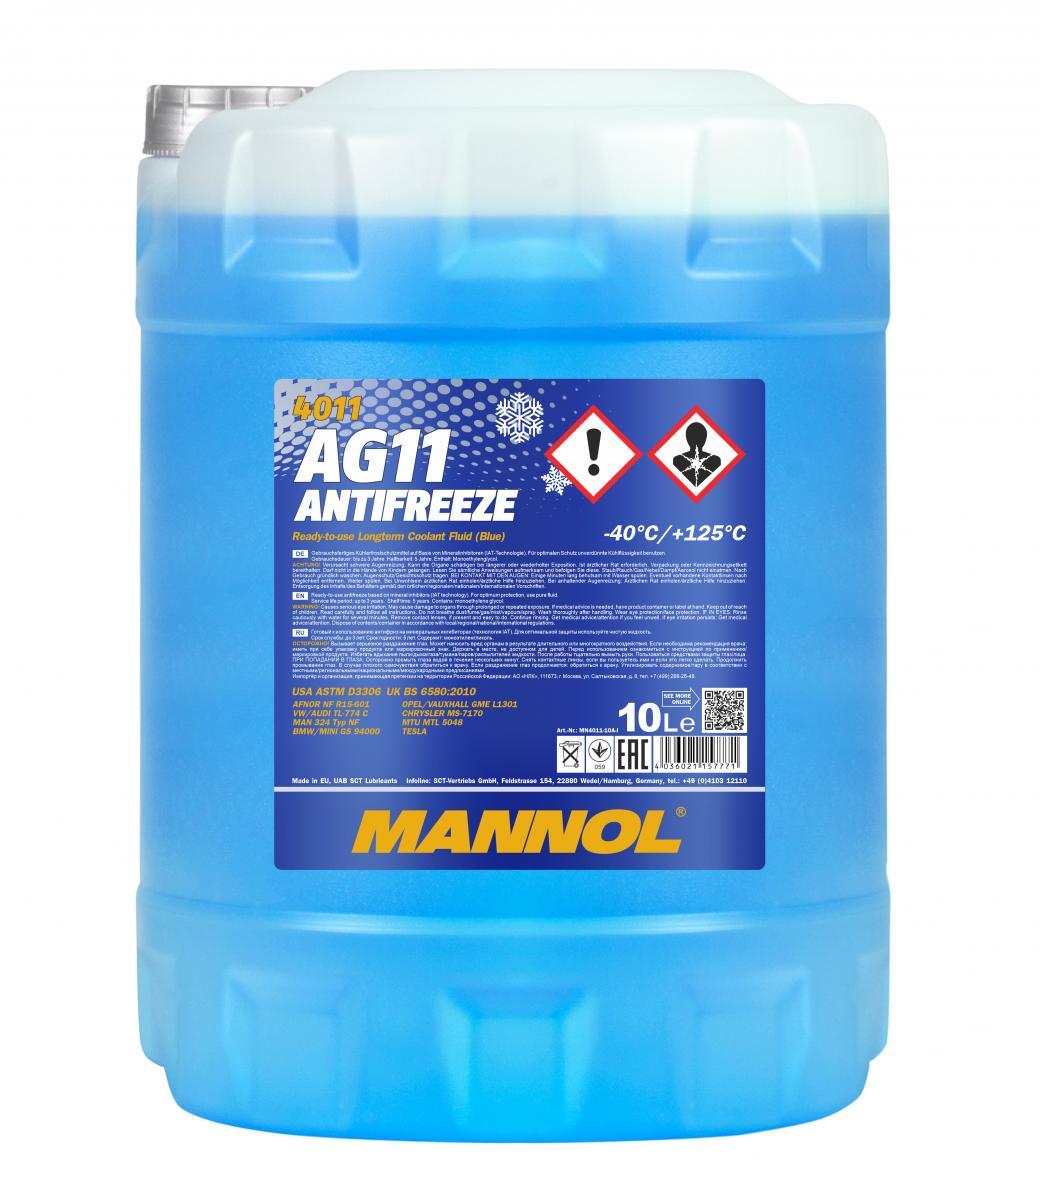 Mannol Mannol Antifreeze AG11 (-40) Longterm